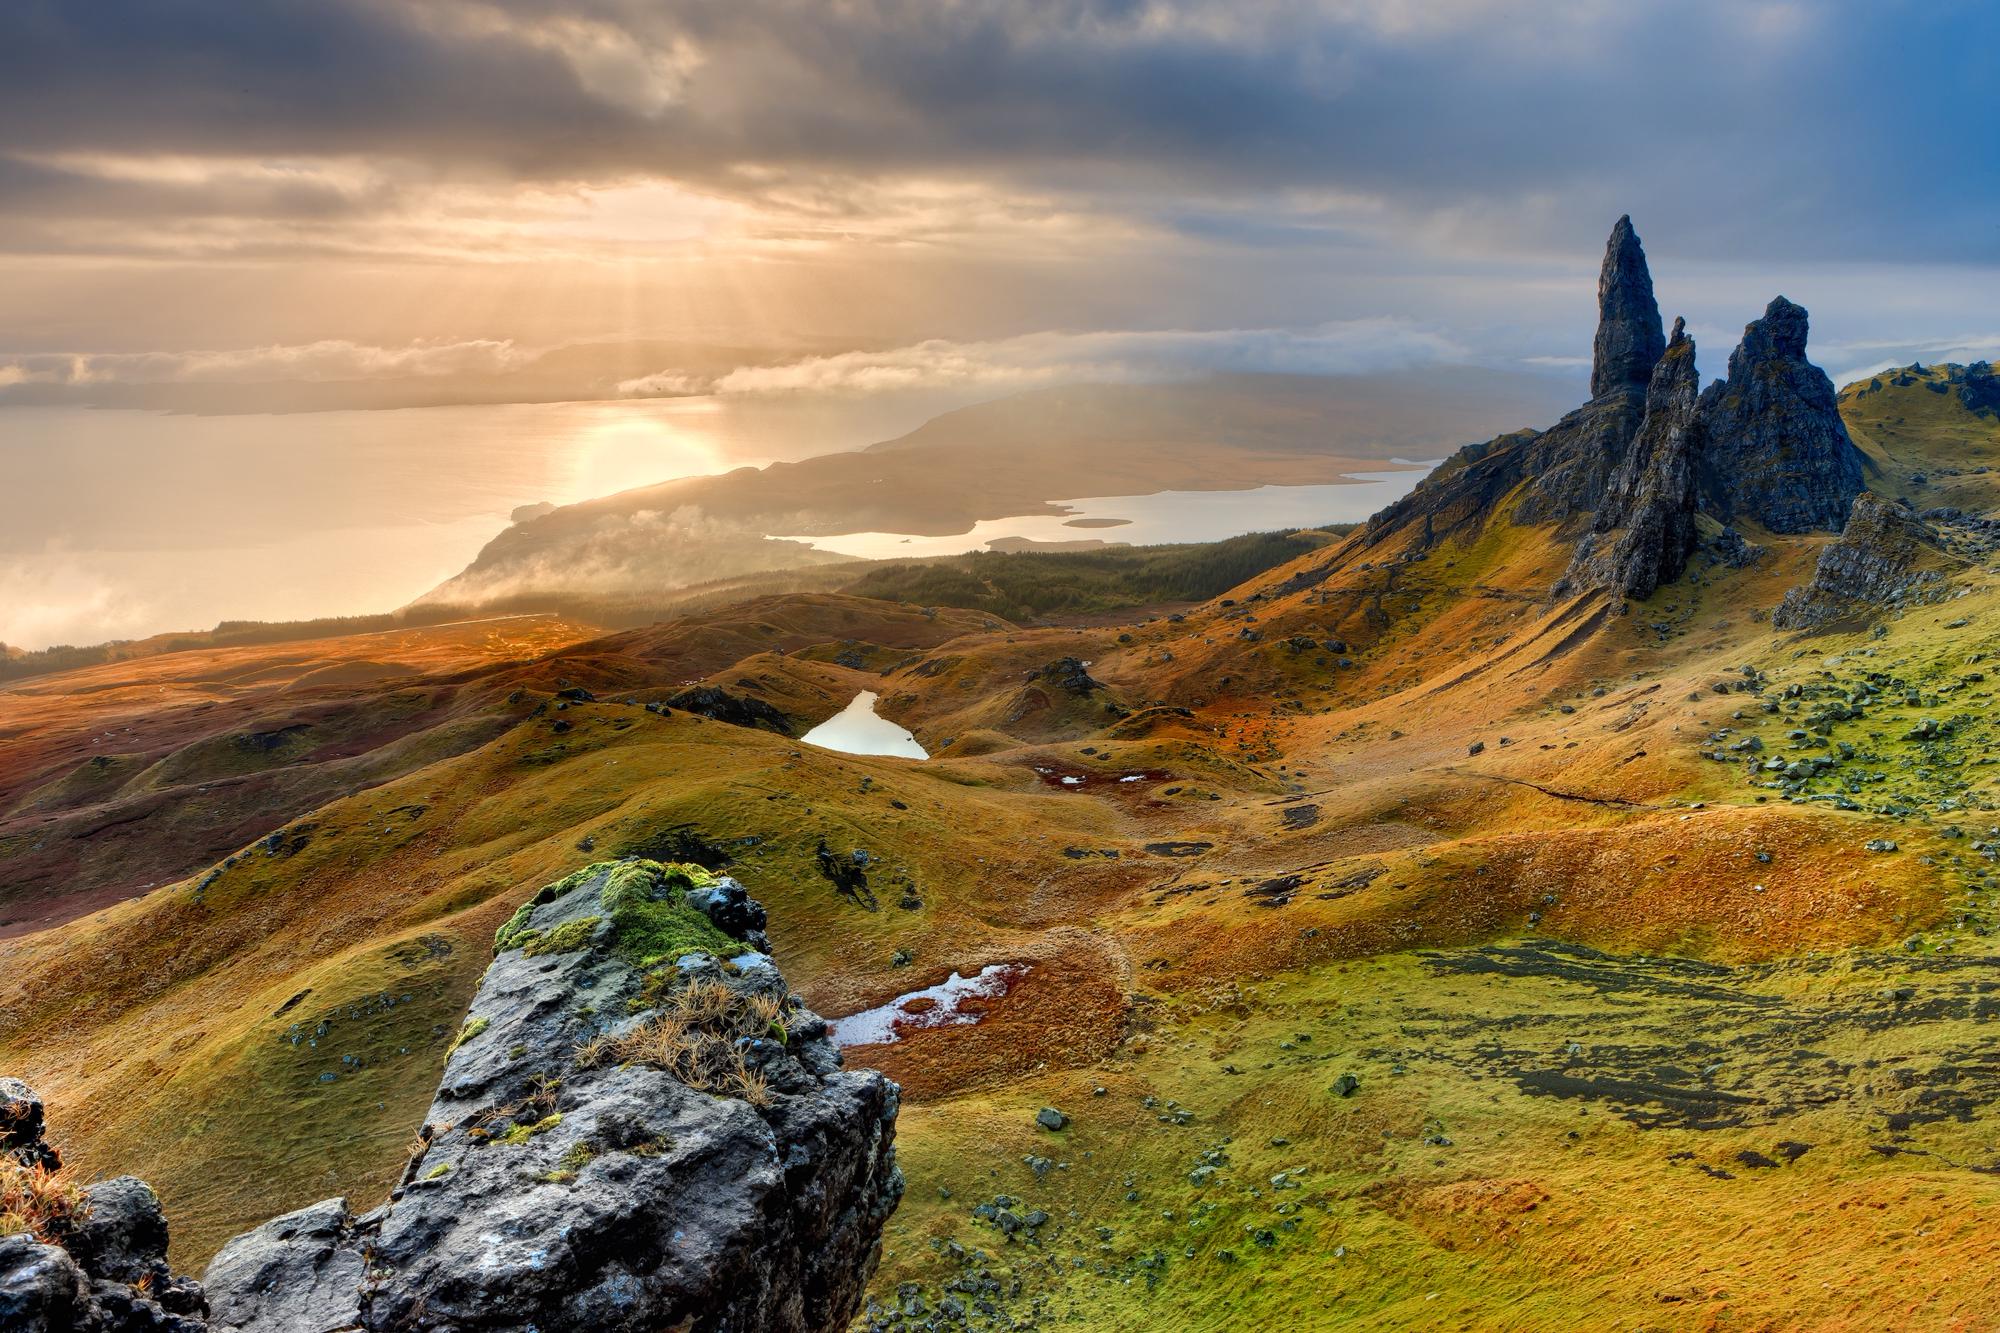 Campsites in Scotland – The top-rated campsites in Scotland